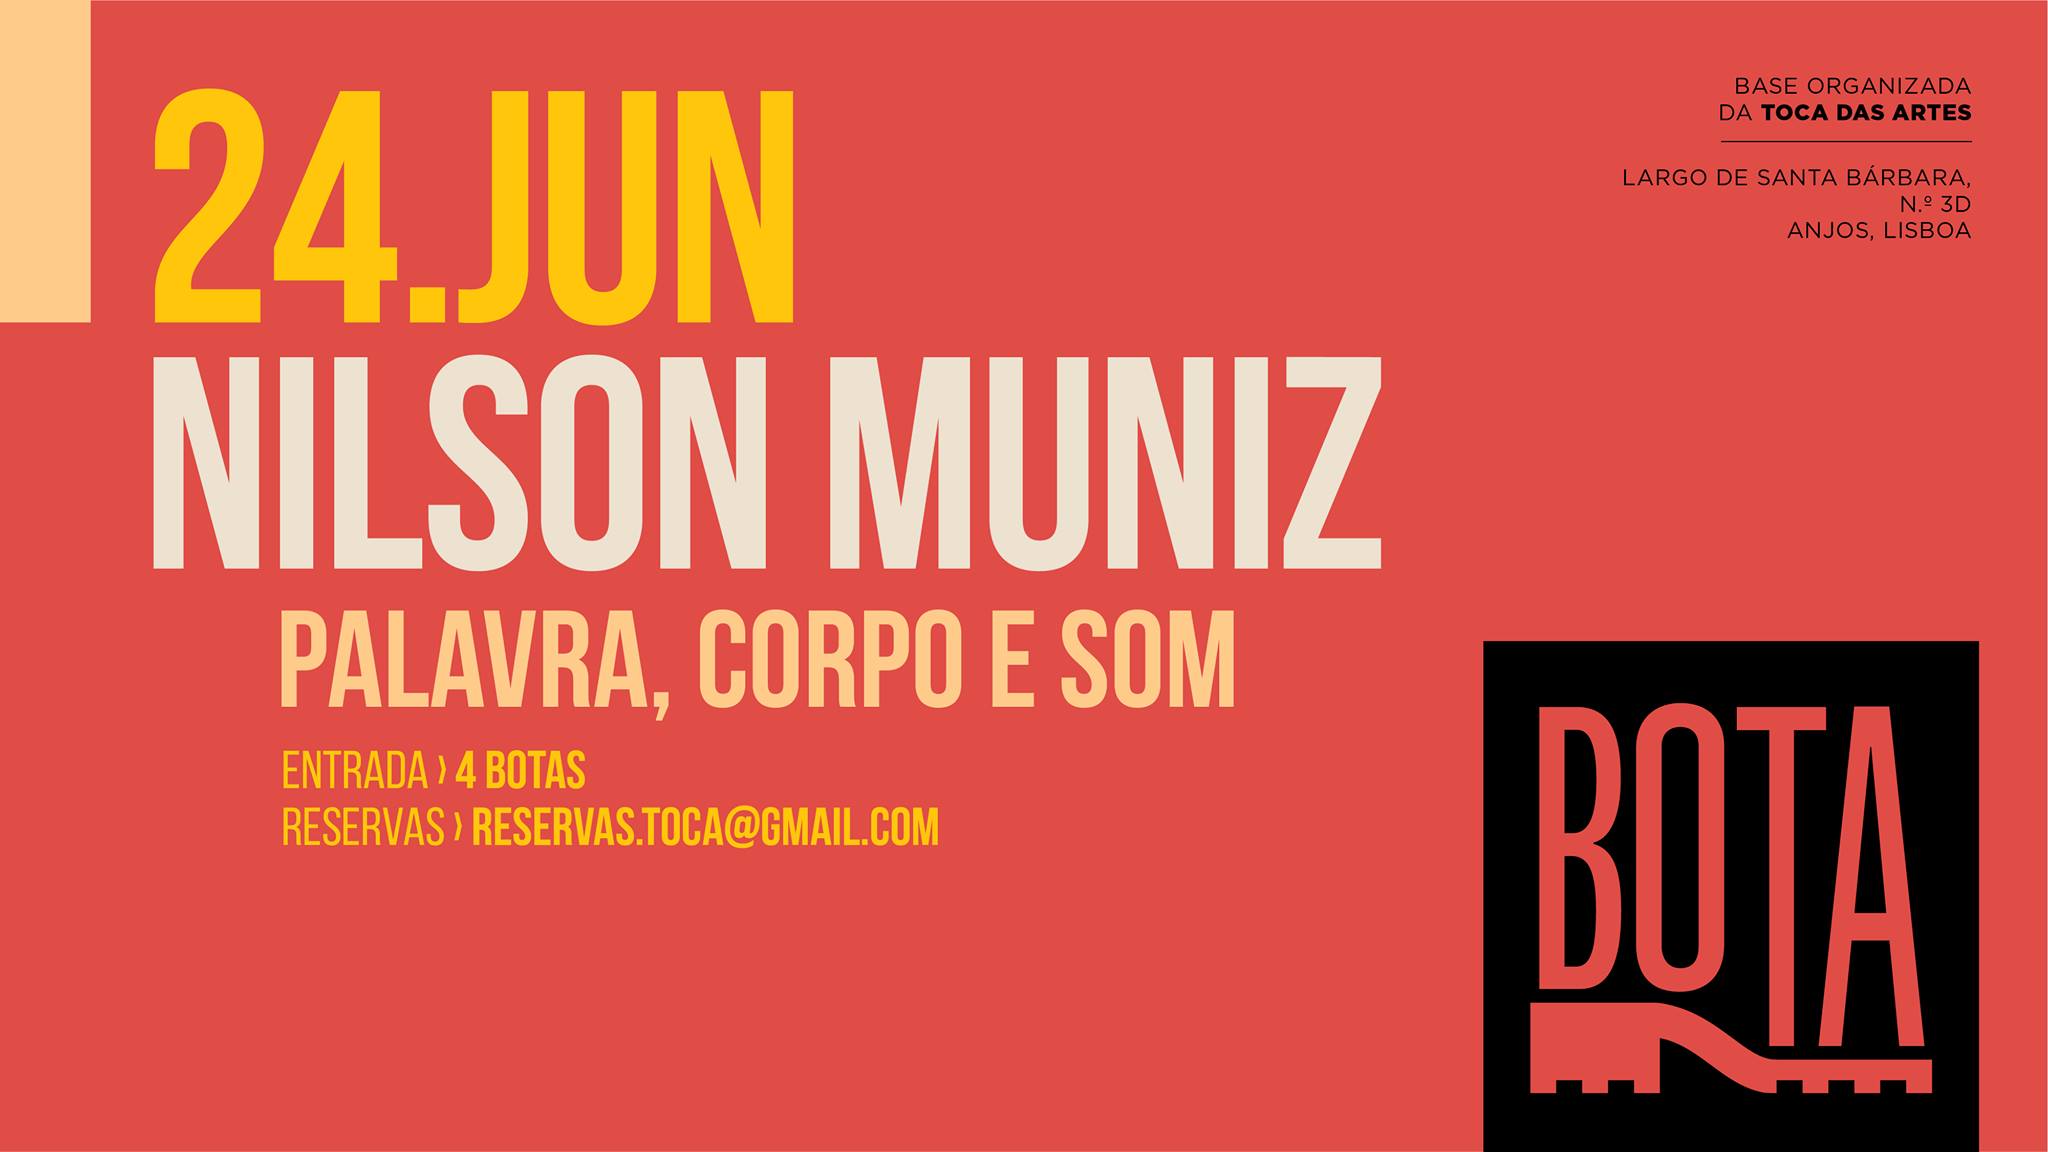 Nilson Muniz - Palavra Corpo e Som @BOTA